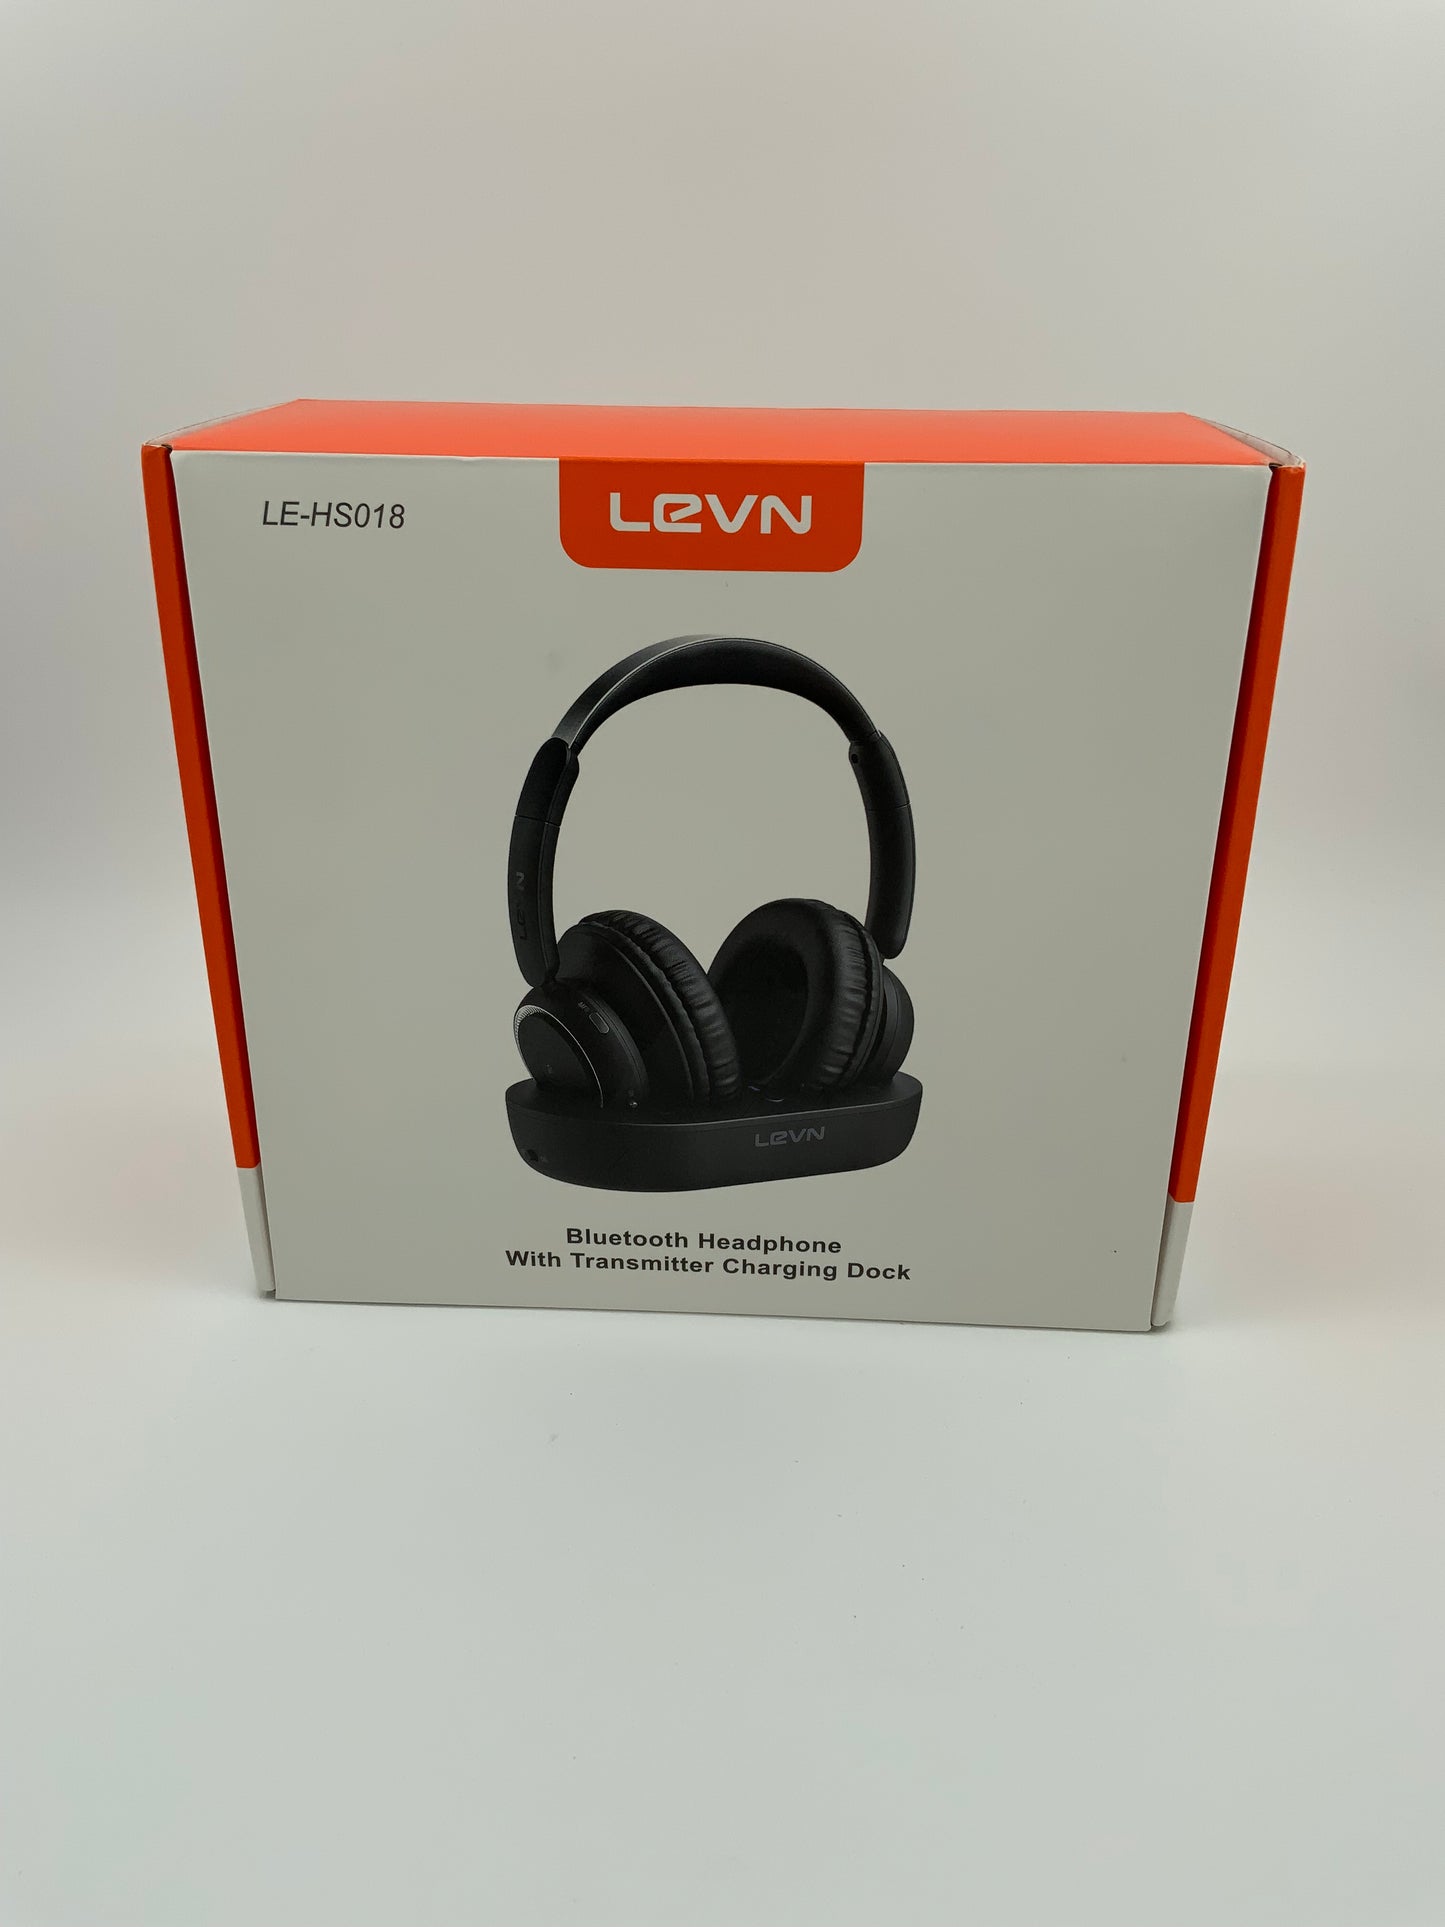 LEVN Bluetooth Headphone